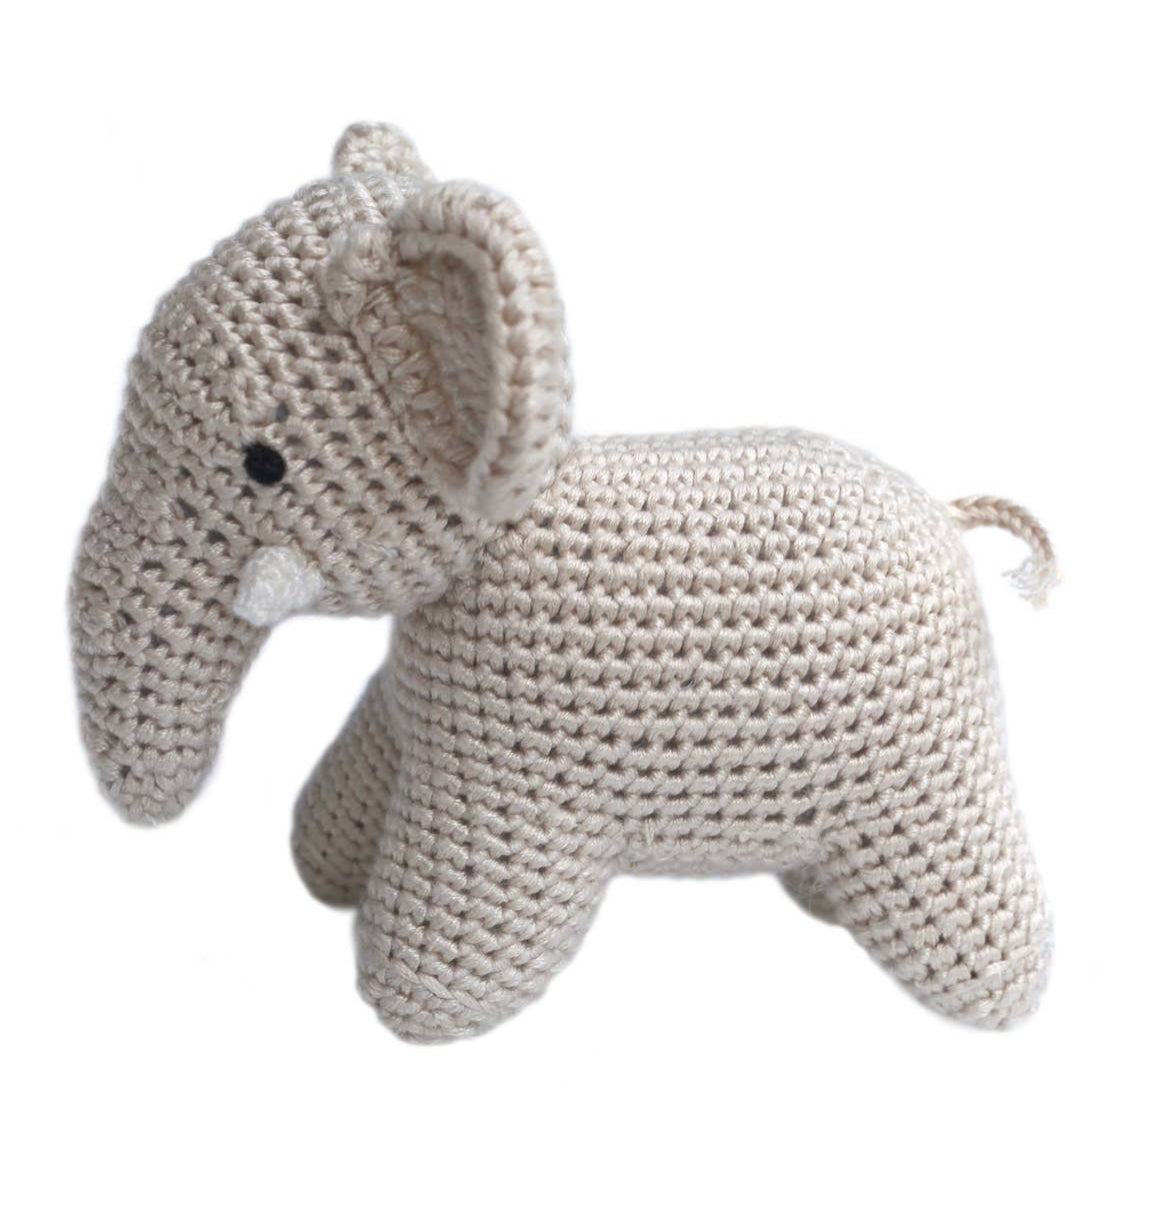 Handmade knitted elephant rattle